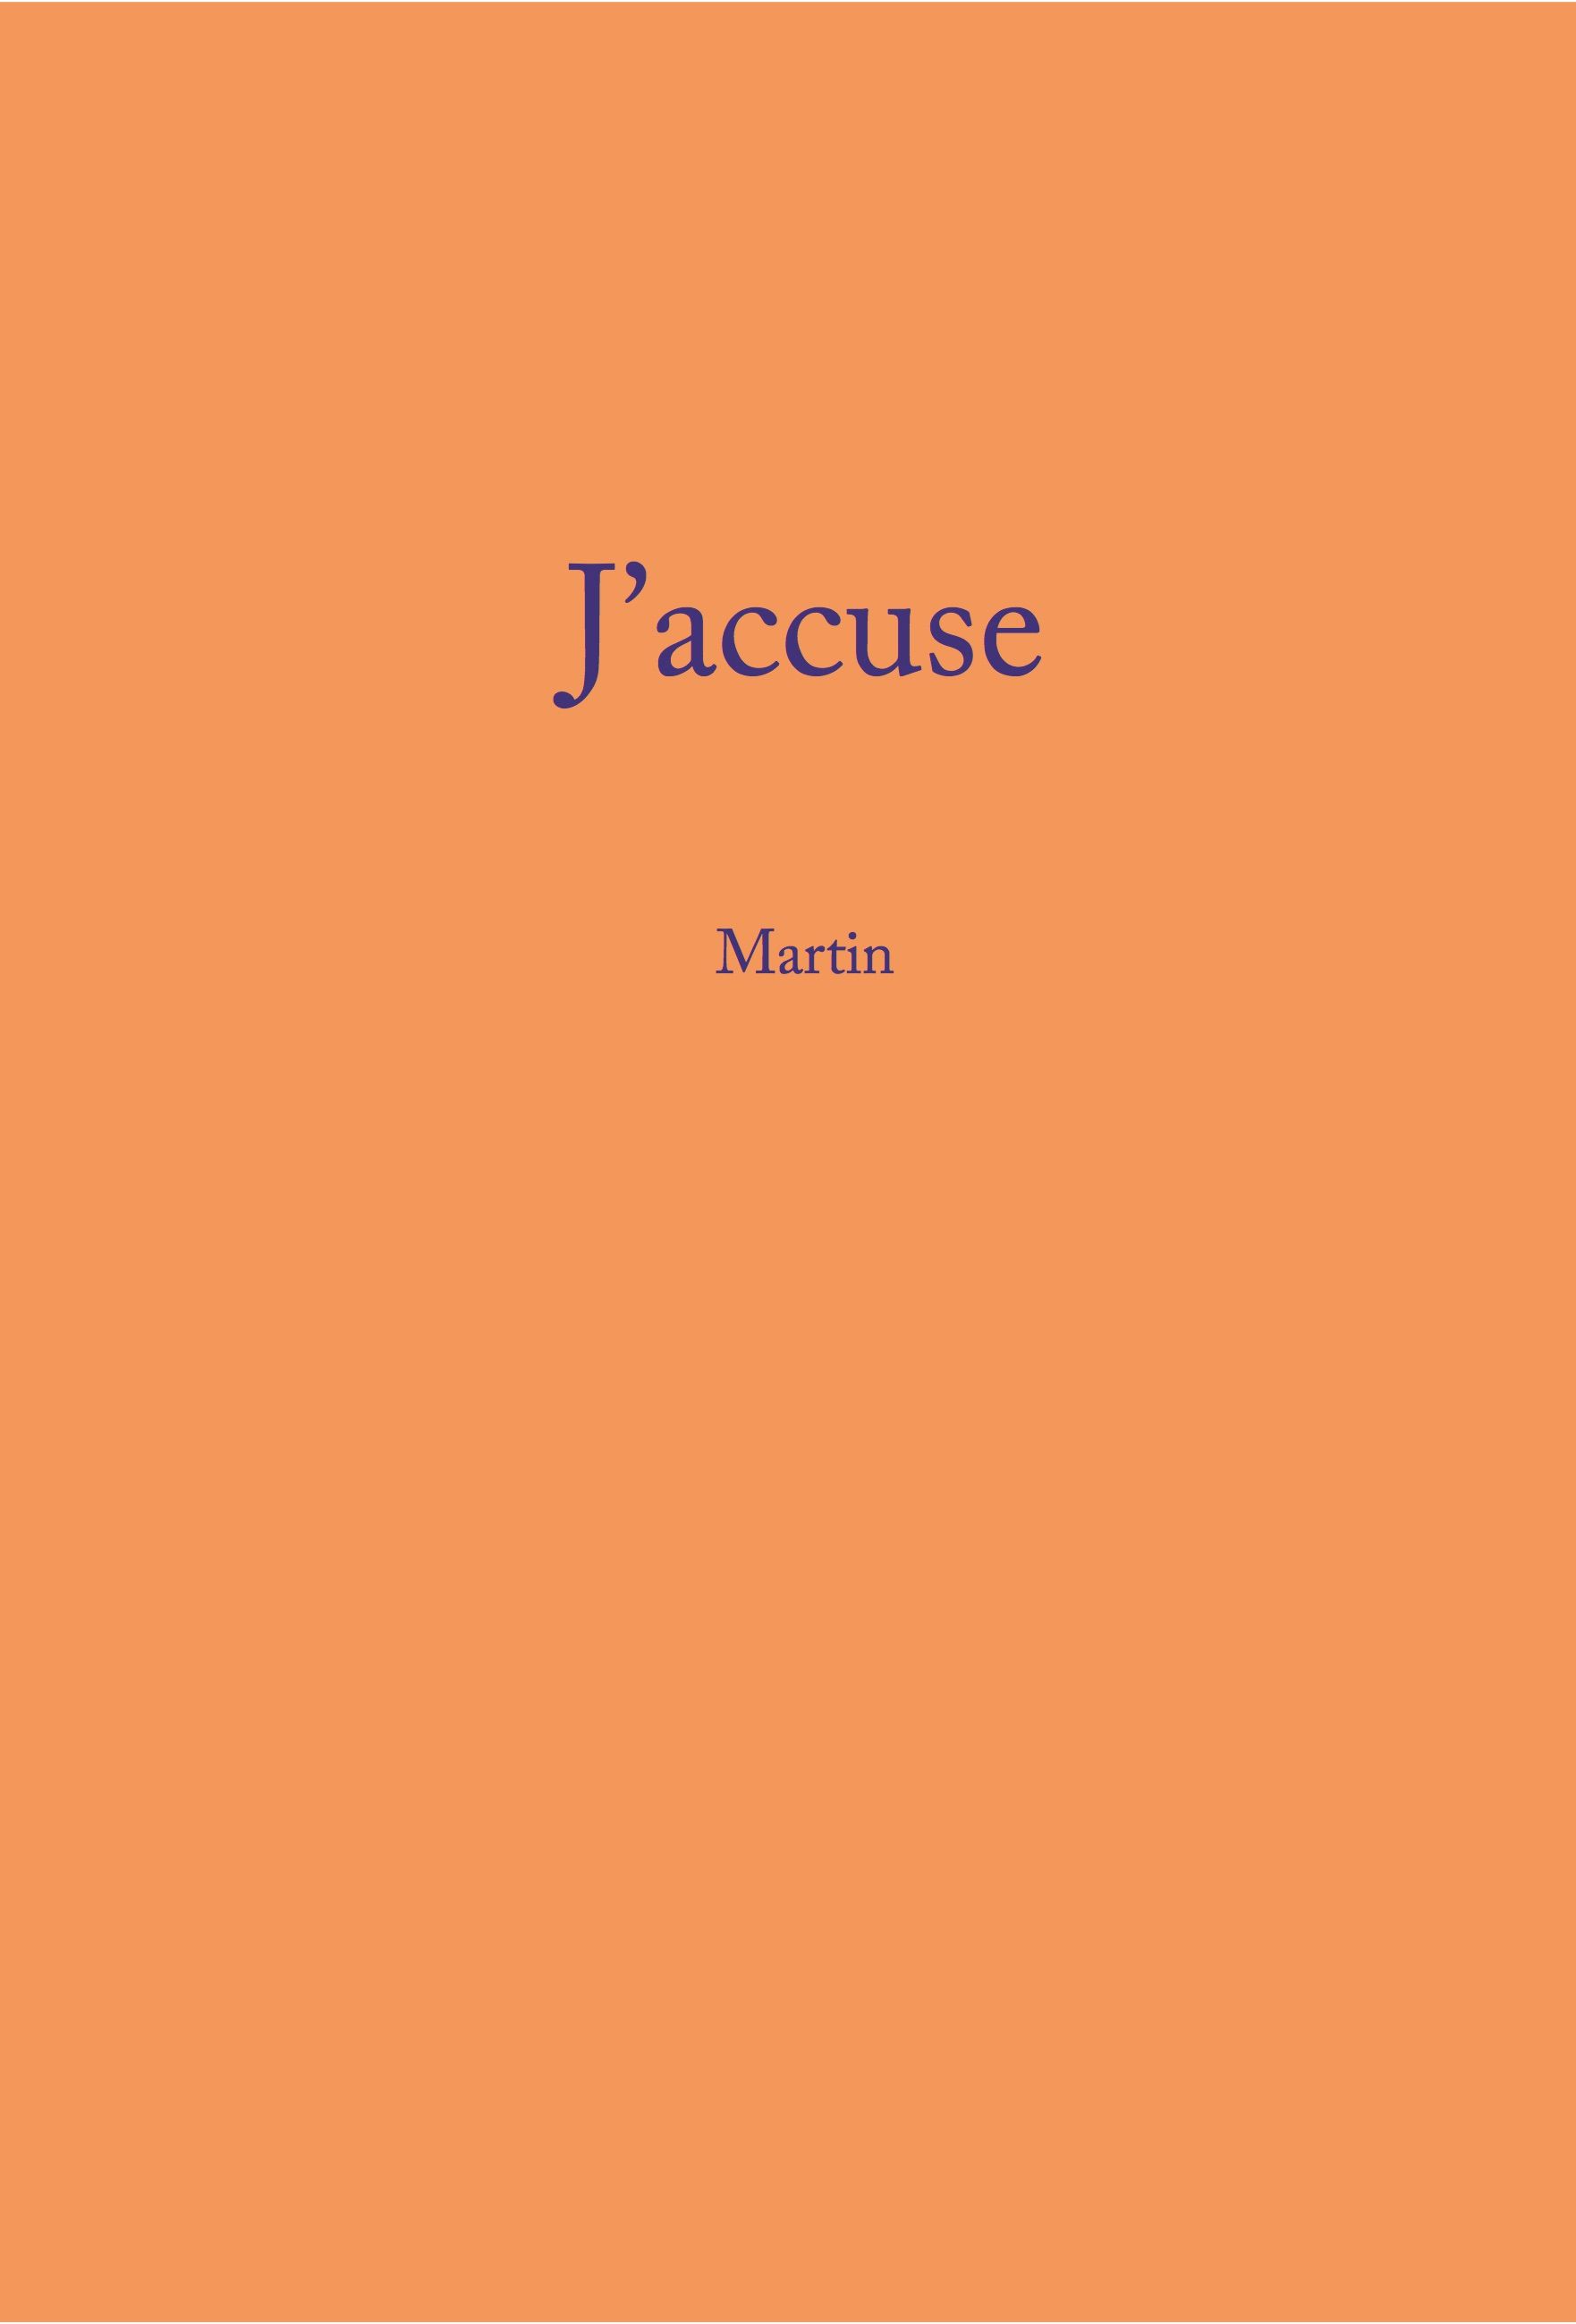 J'accuse, eBook by Martin